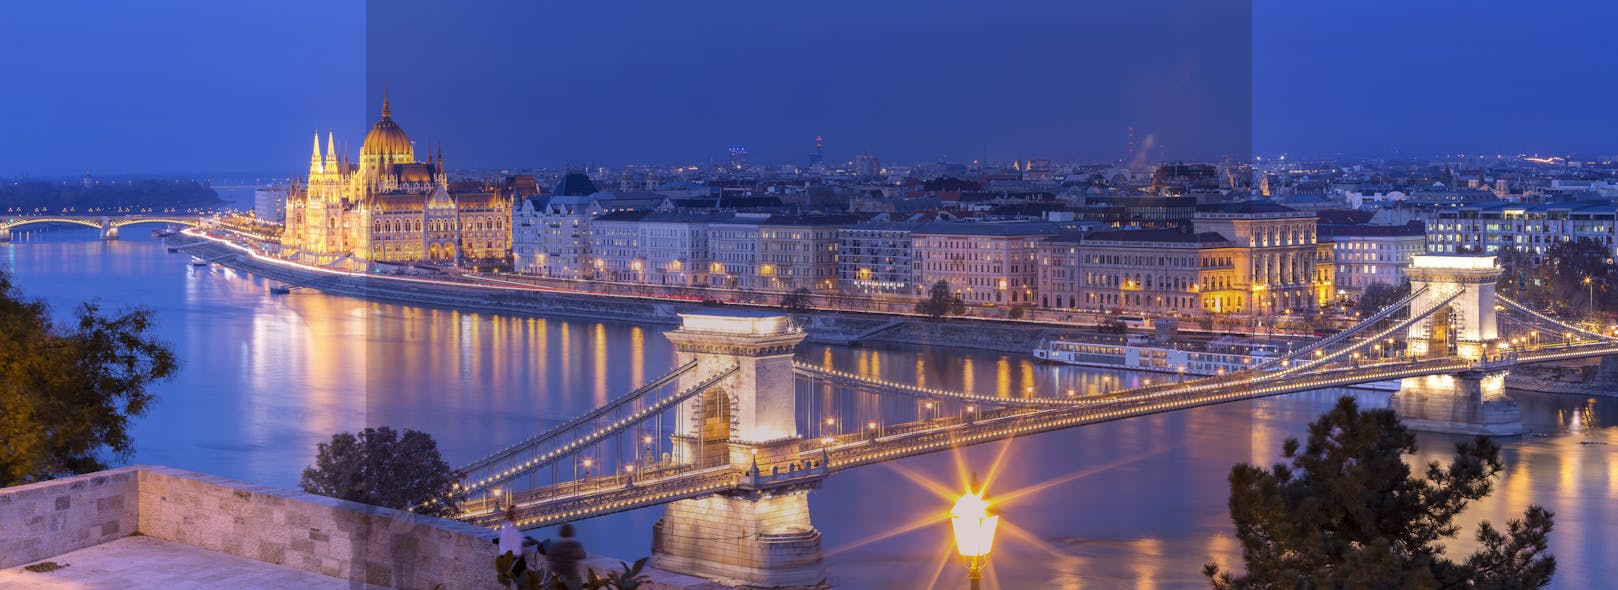 Location shot of Budapest